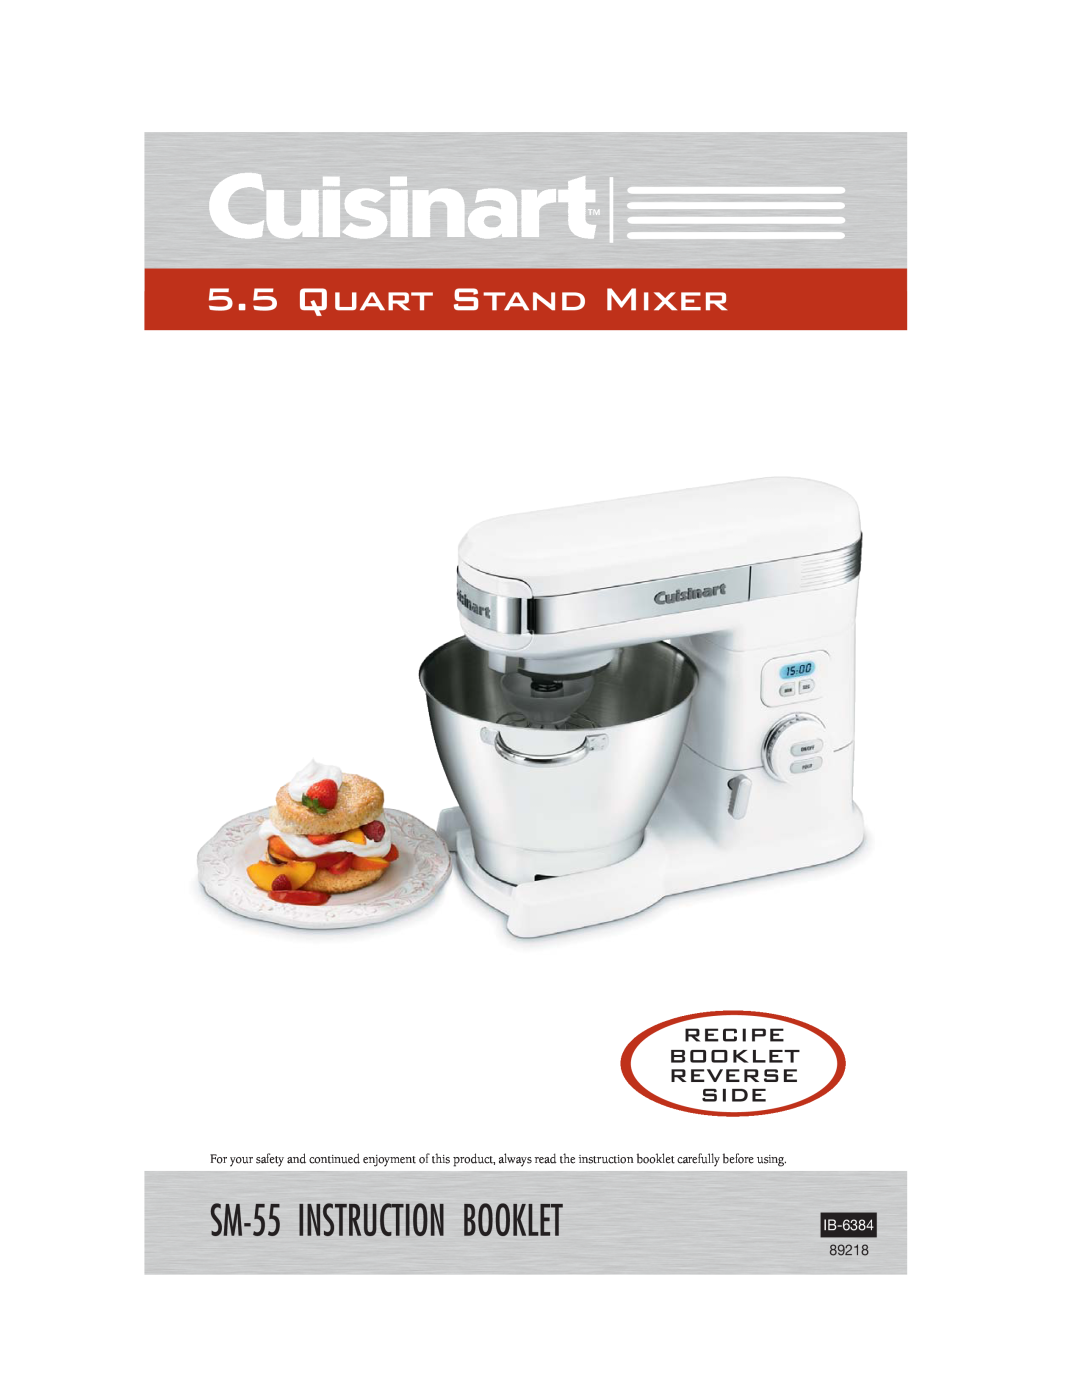 Cuisinart SM-55BK manual Quart Stand Mixer, SM-55 INSTRUCTION BOOKLET, Recipe Booklet Reverse Side, IB-6384 